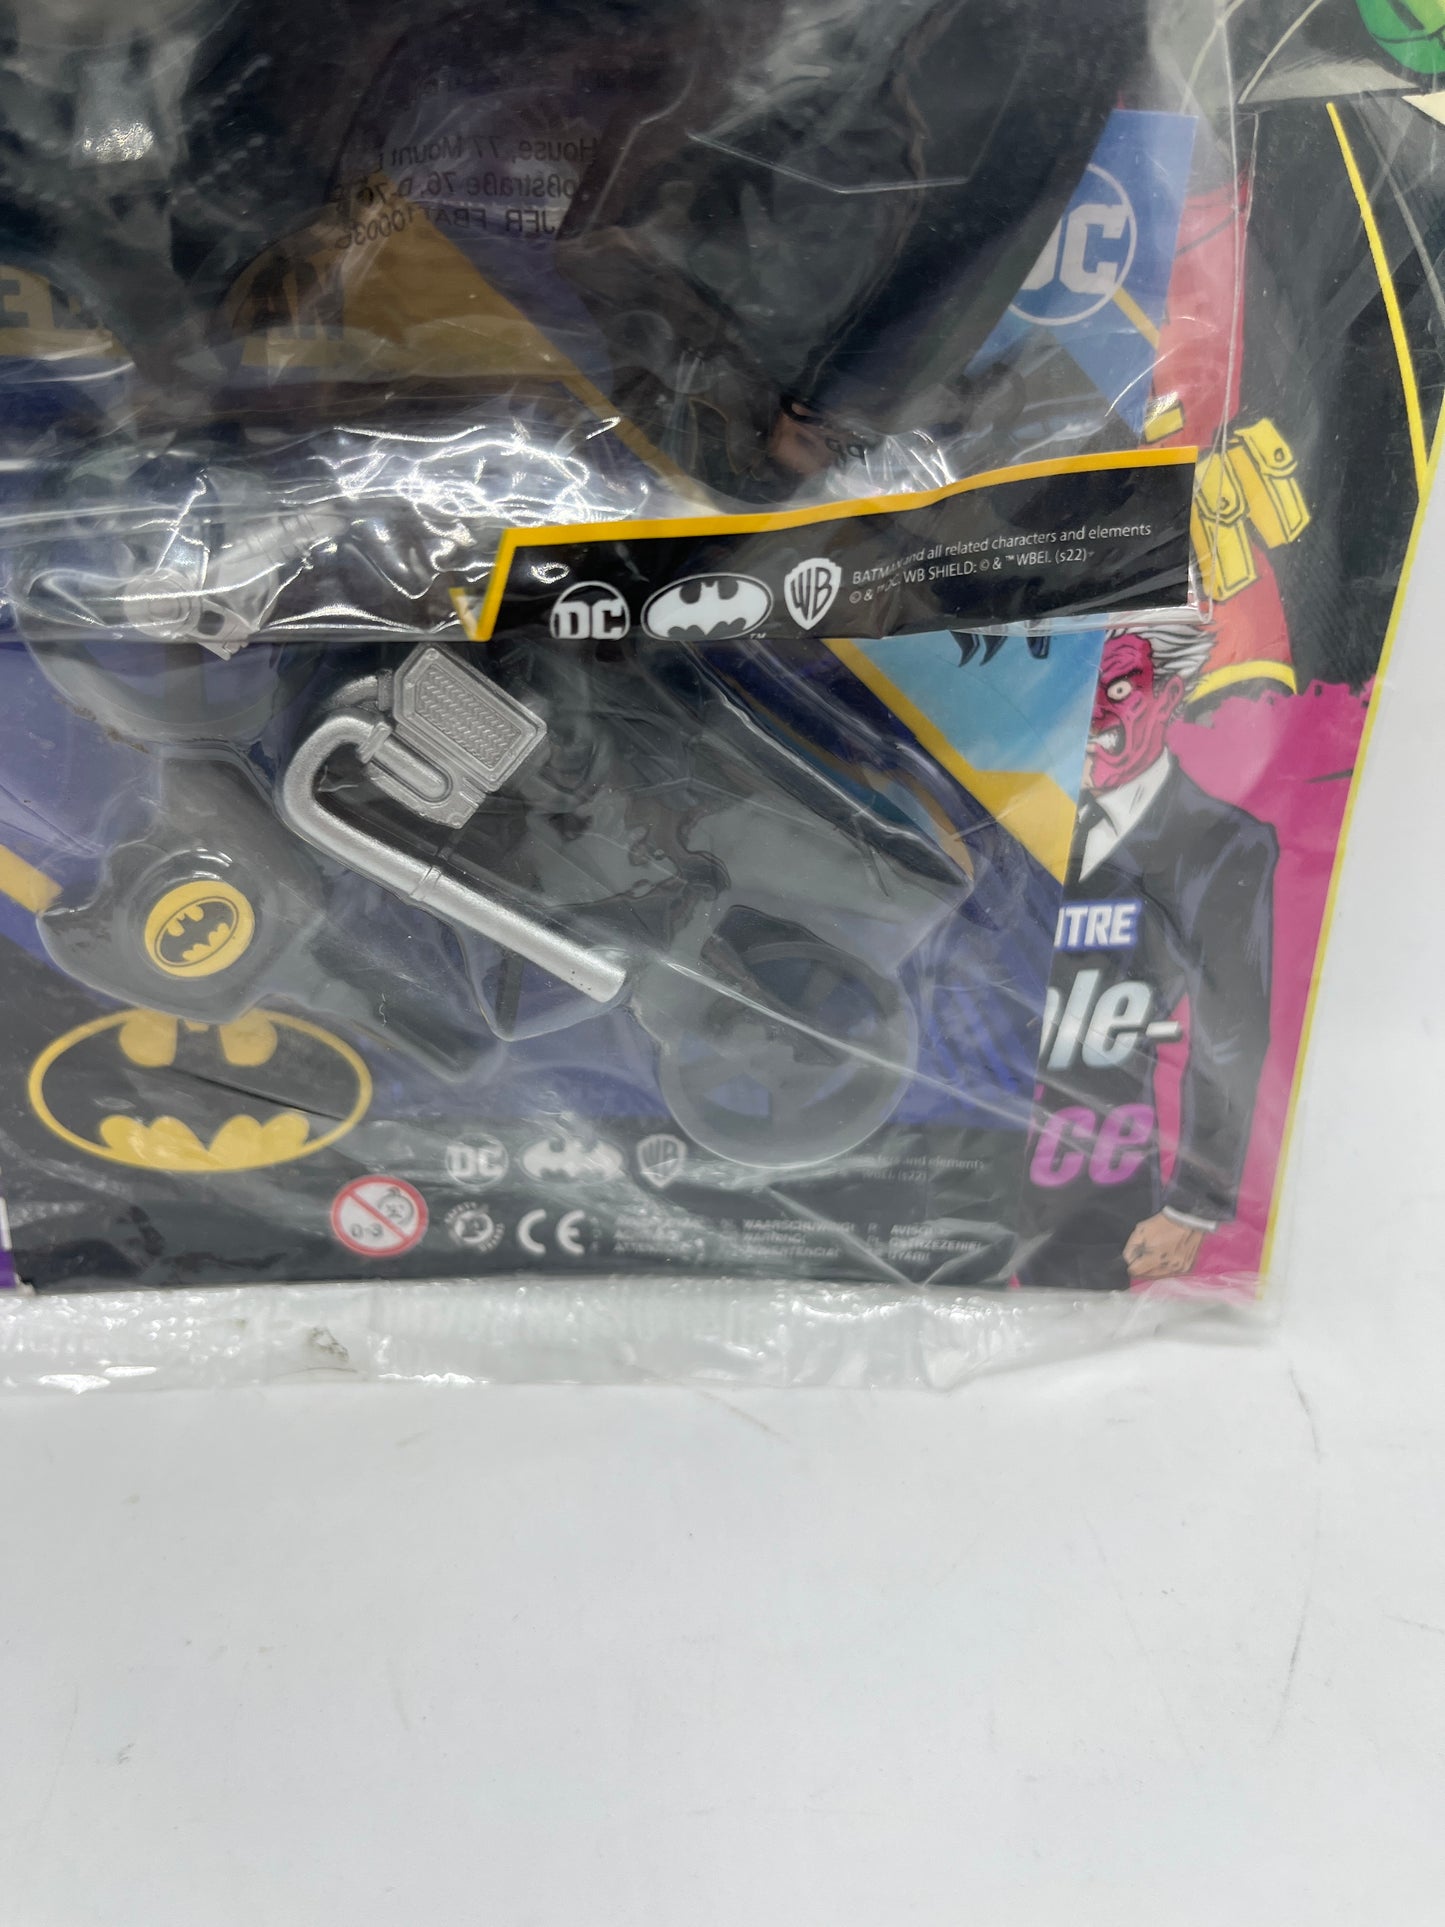 Livre d’activité magazines Disney Batman Marvel avec sa bat moto et sa clef Neuf